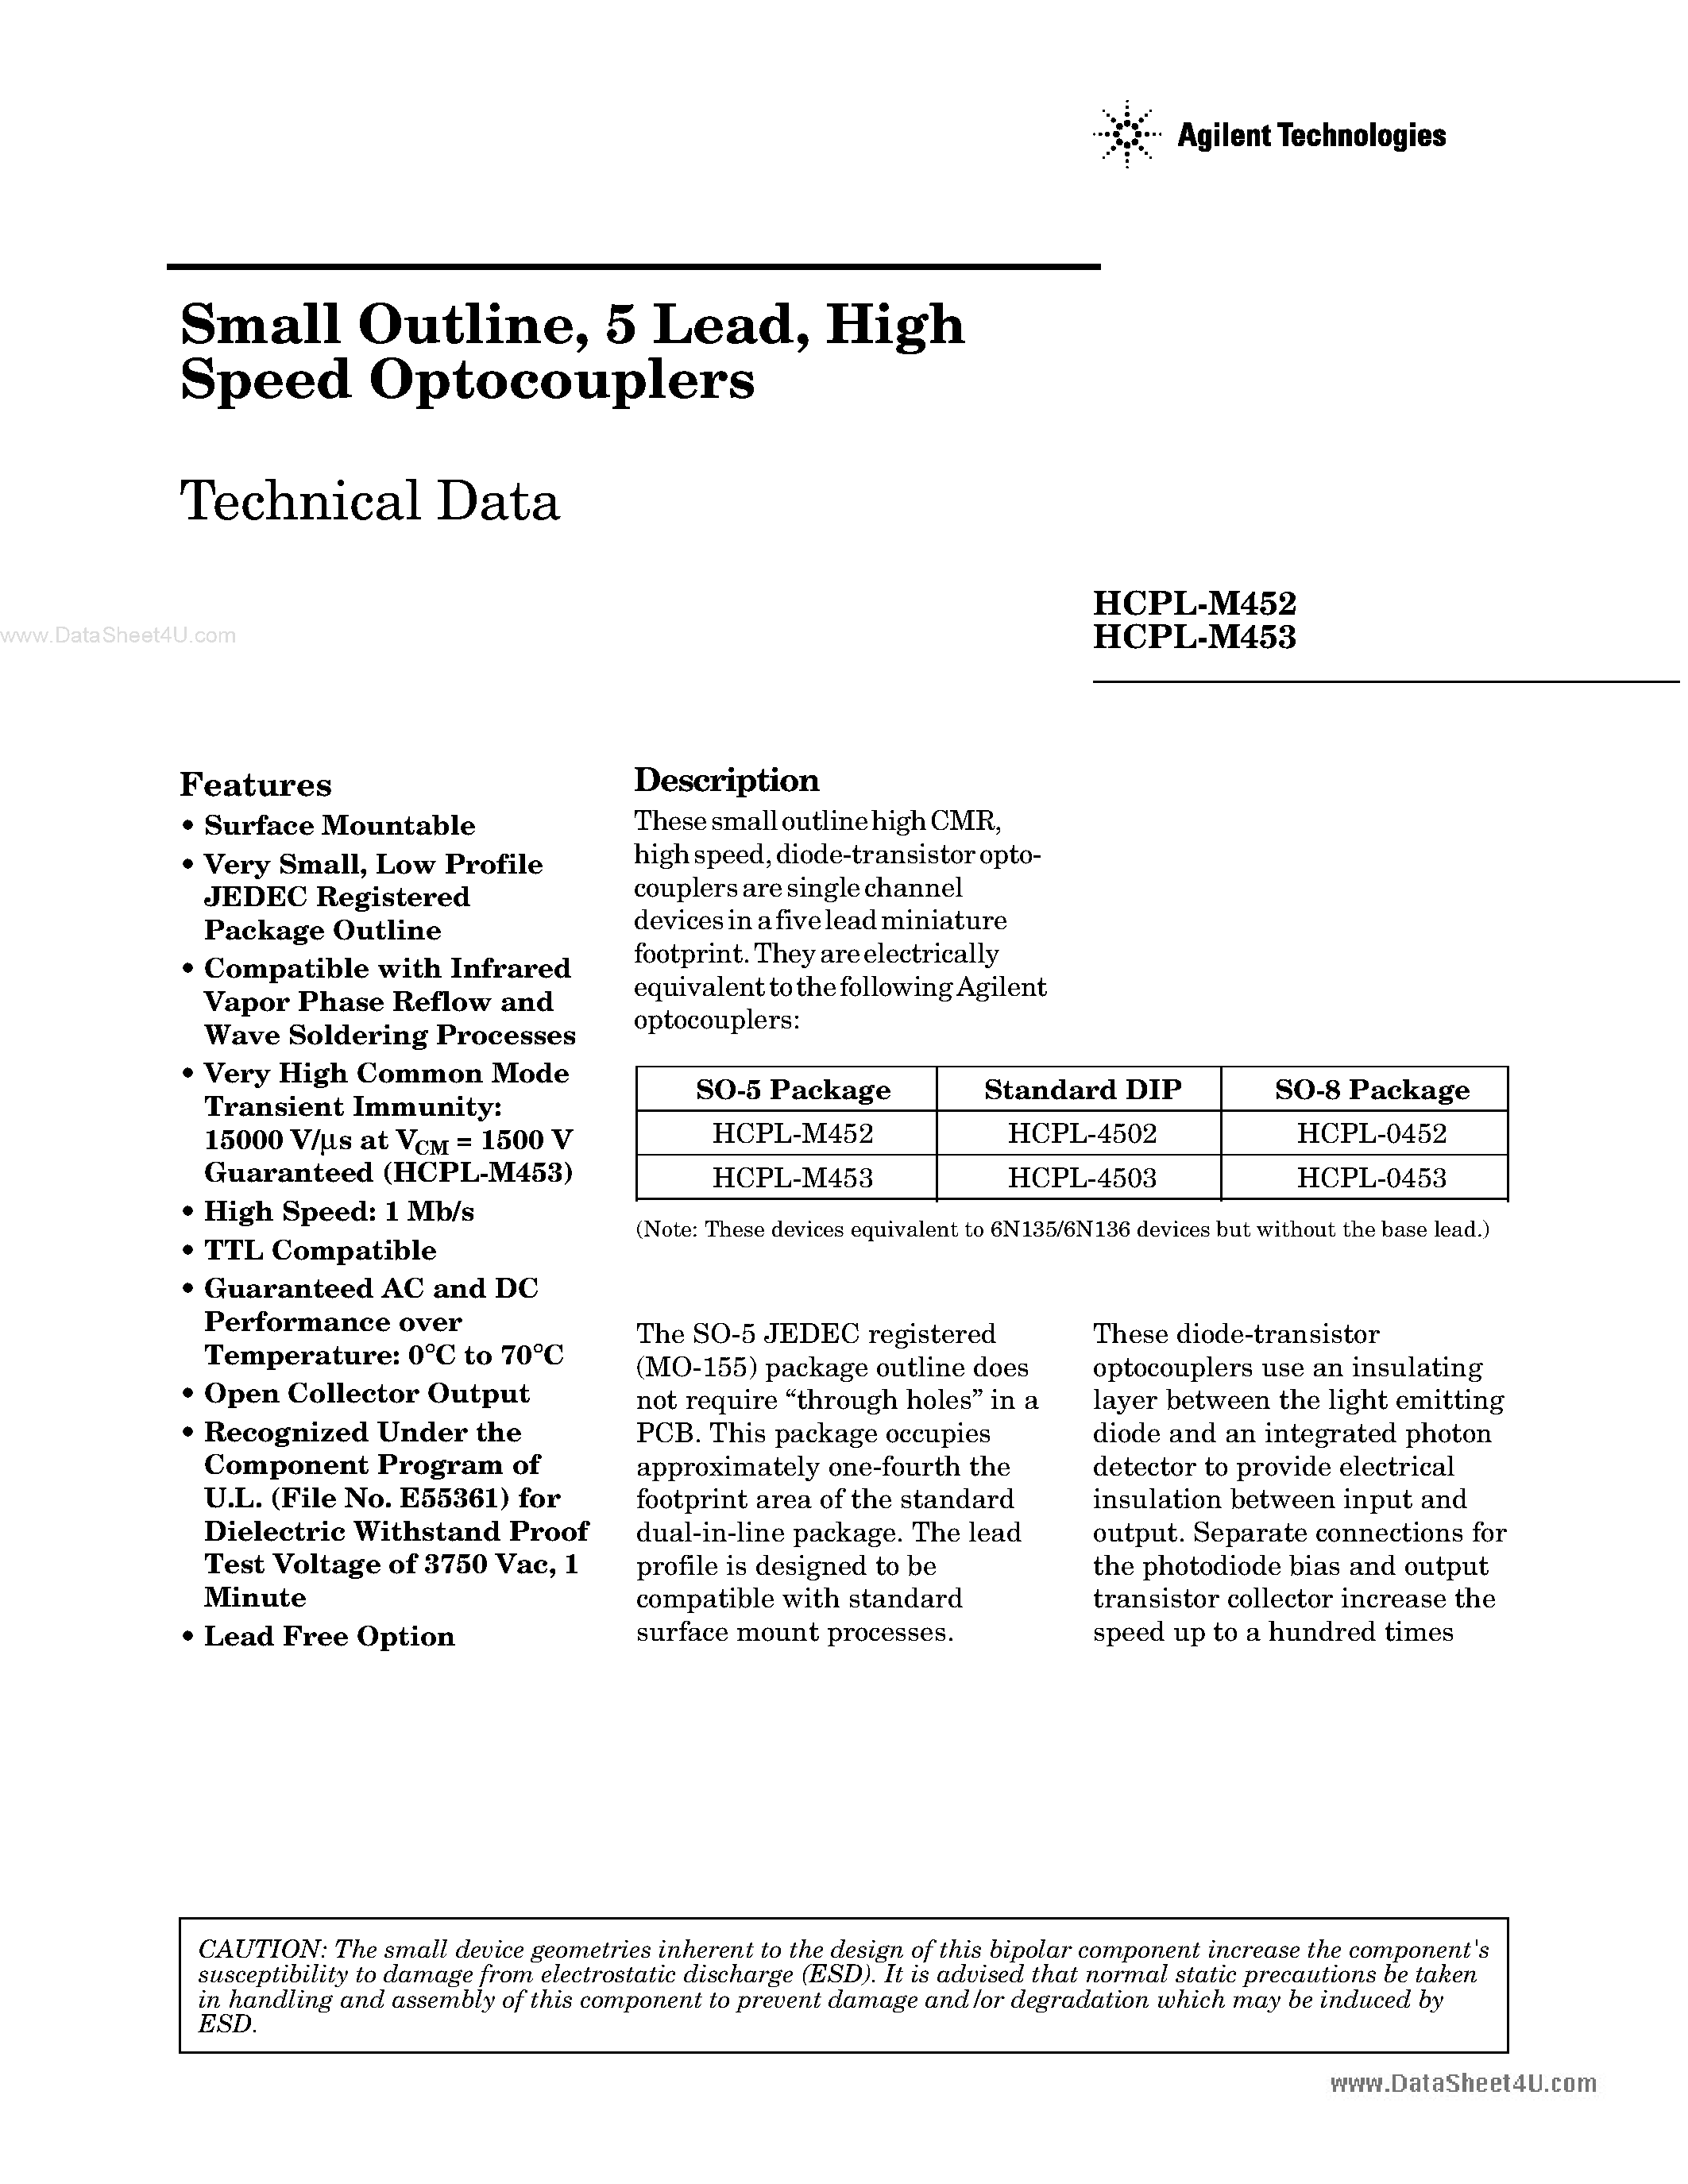 Datasheet HCPL-M452 - (HCPL-M452 / HCPL-M453) High Speed Optocouplers page 1